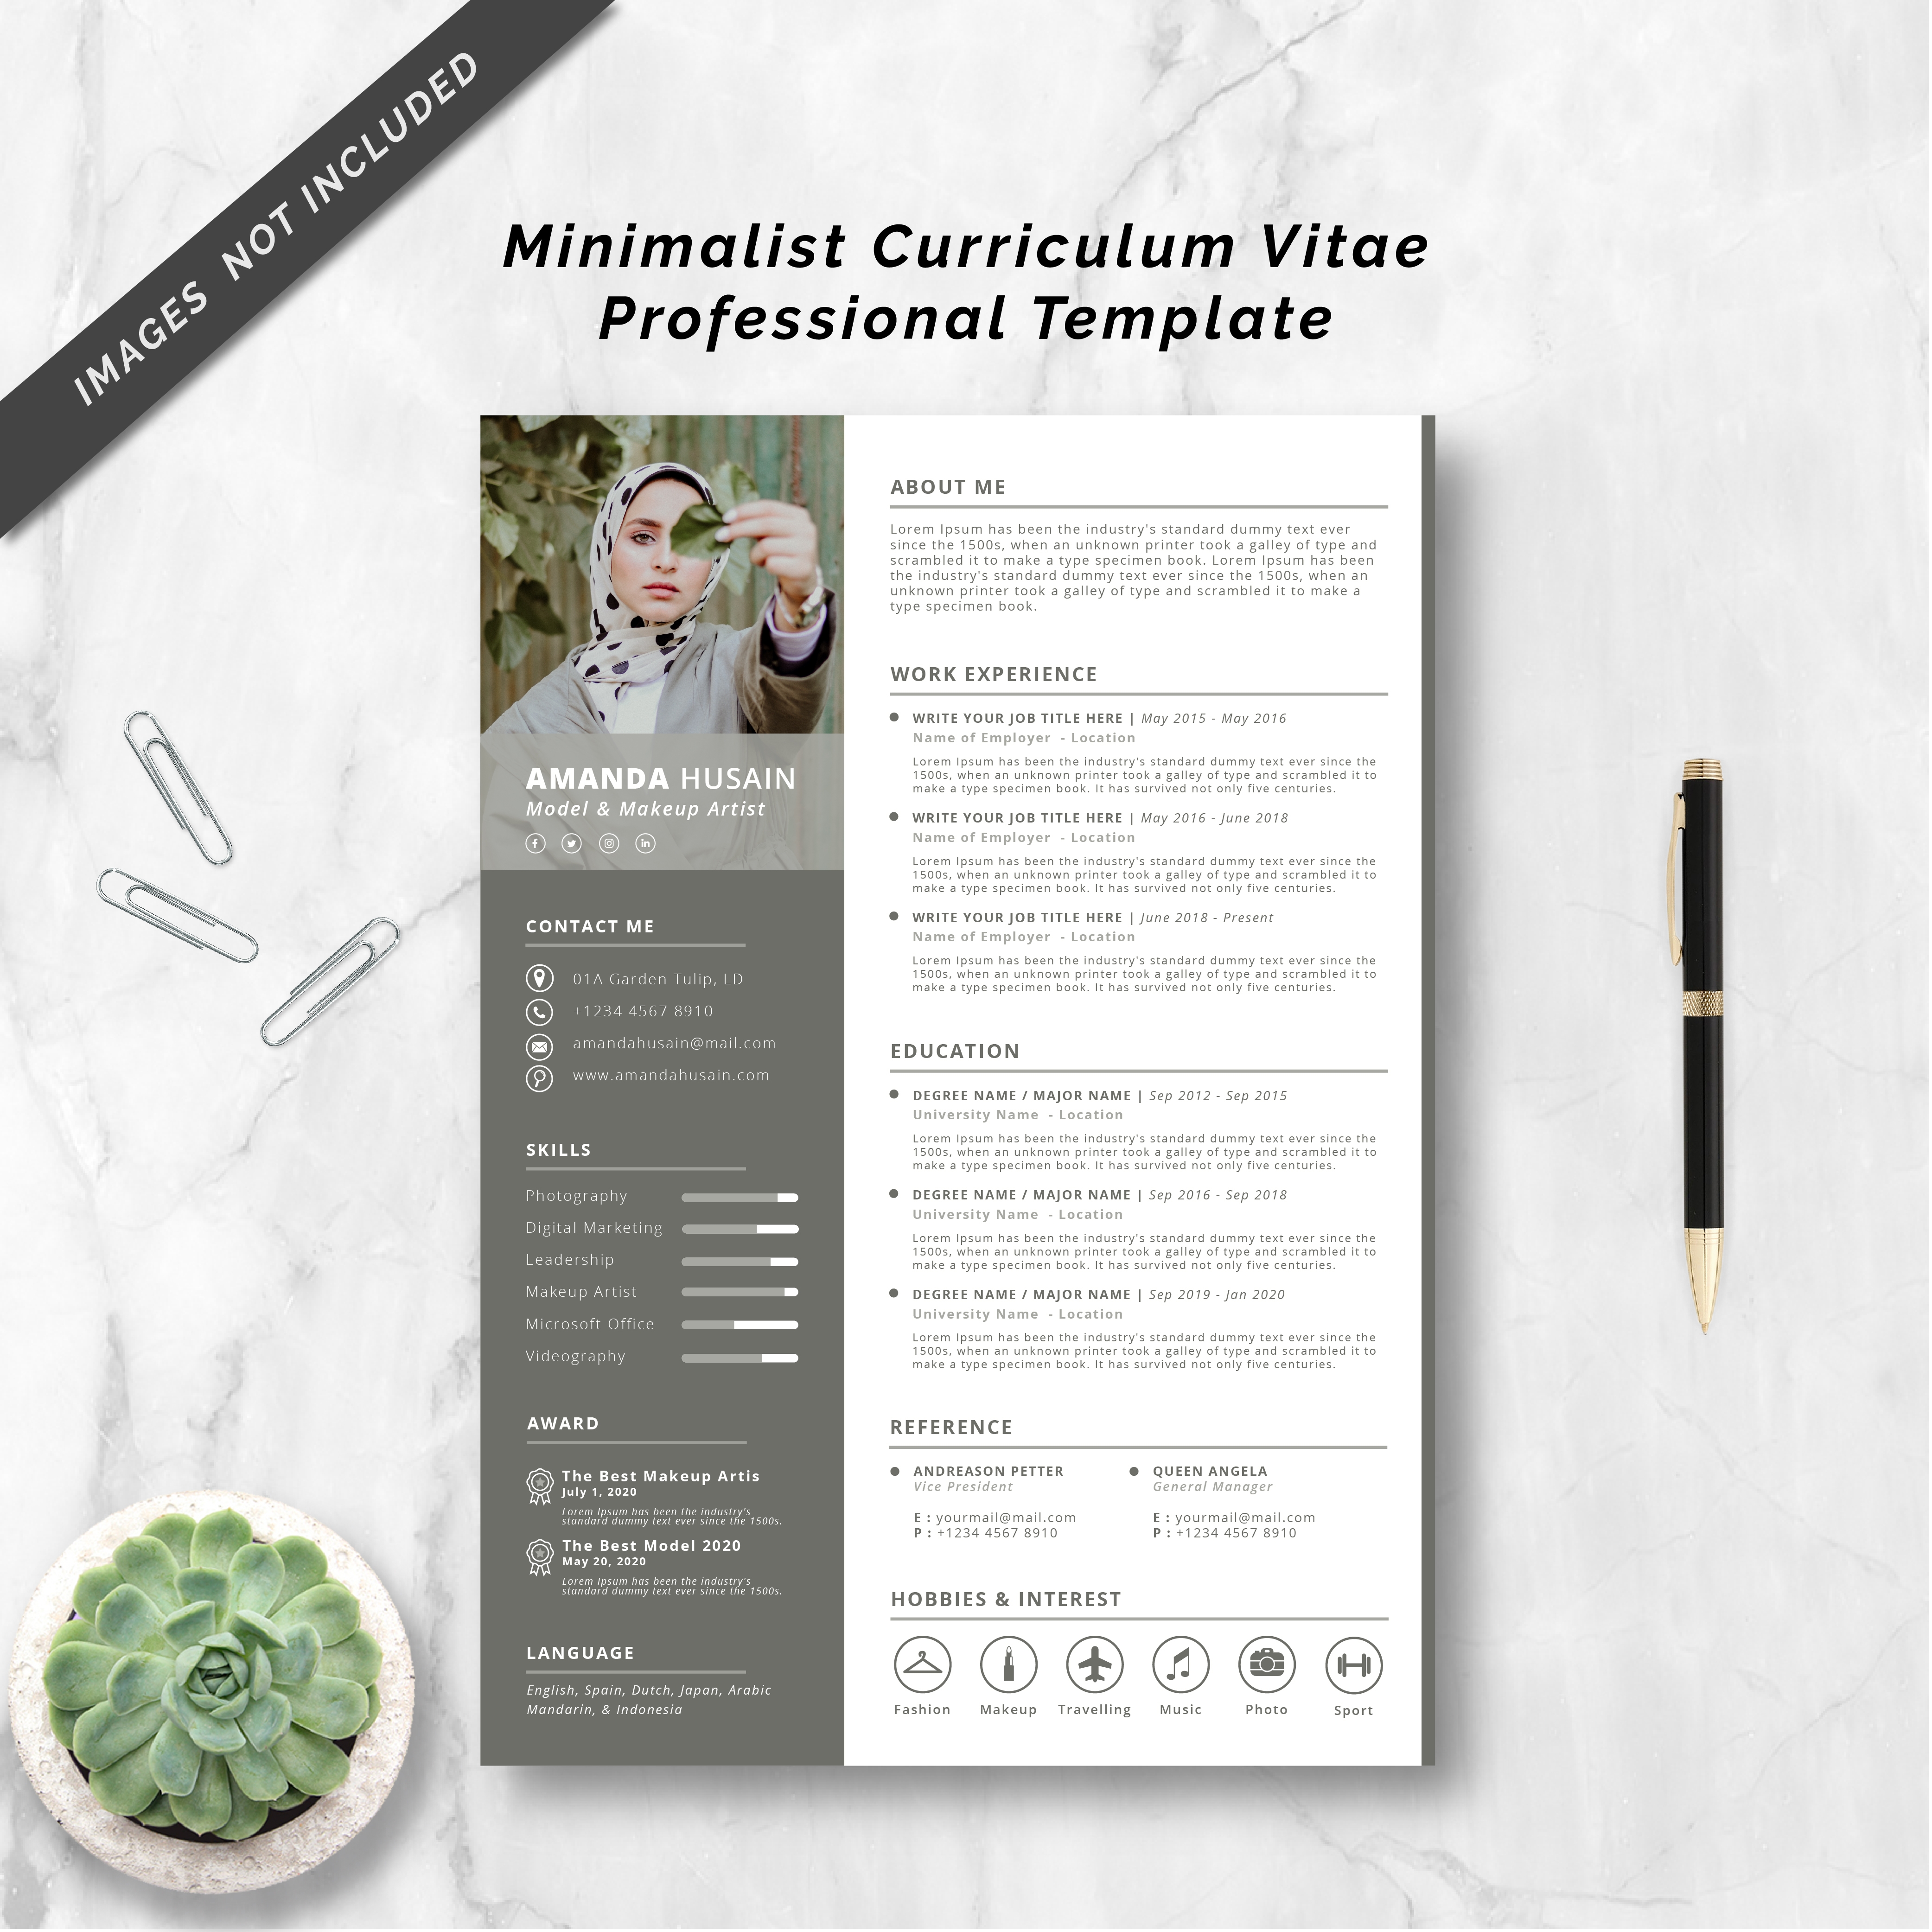 Minimalist CV Professional Template